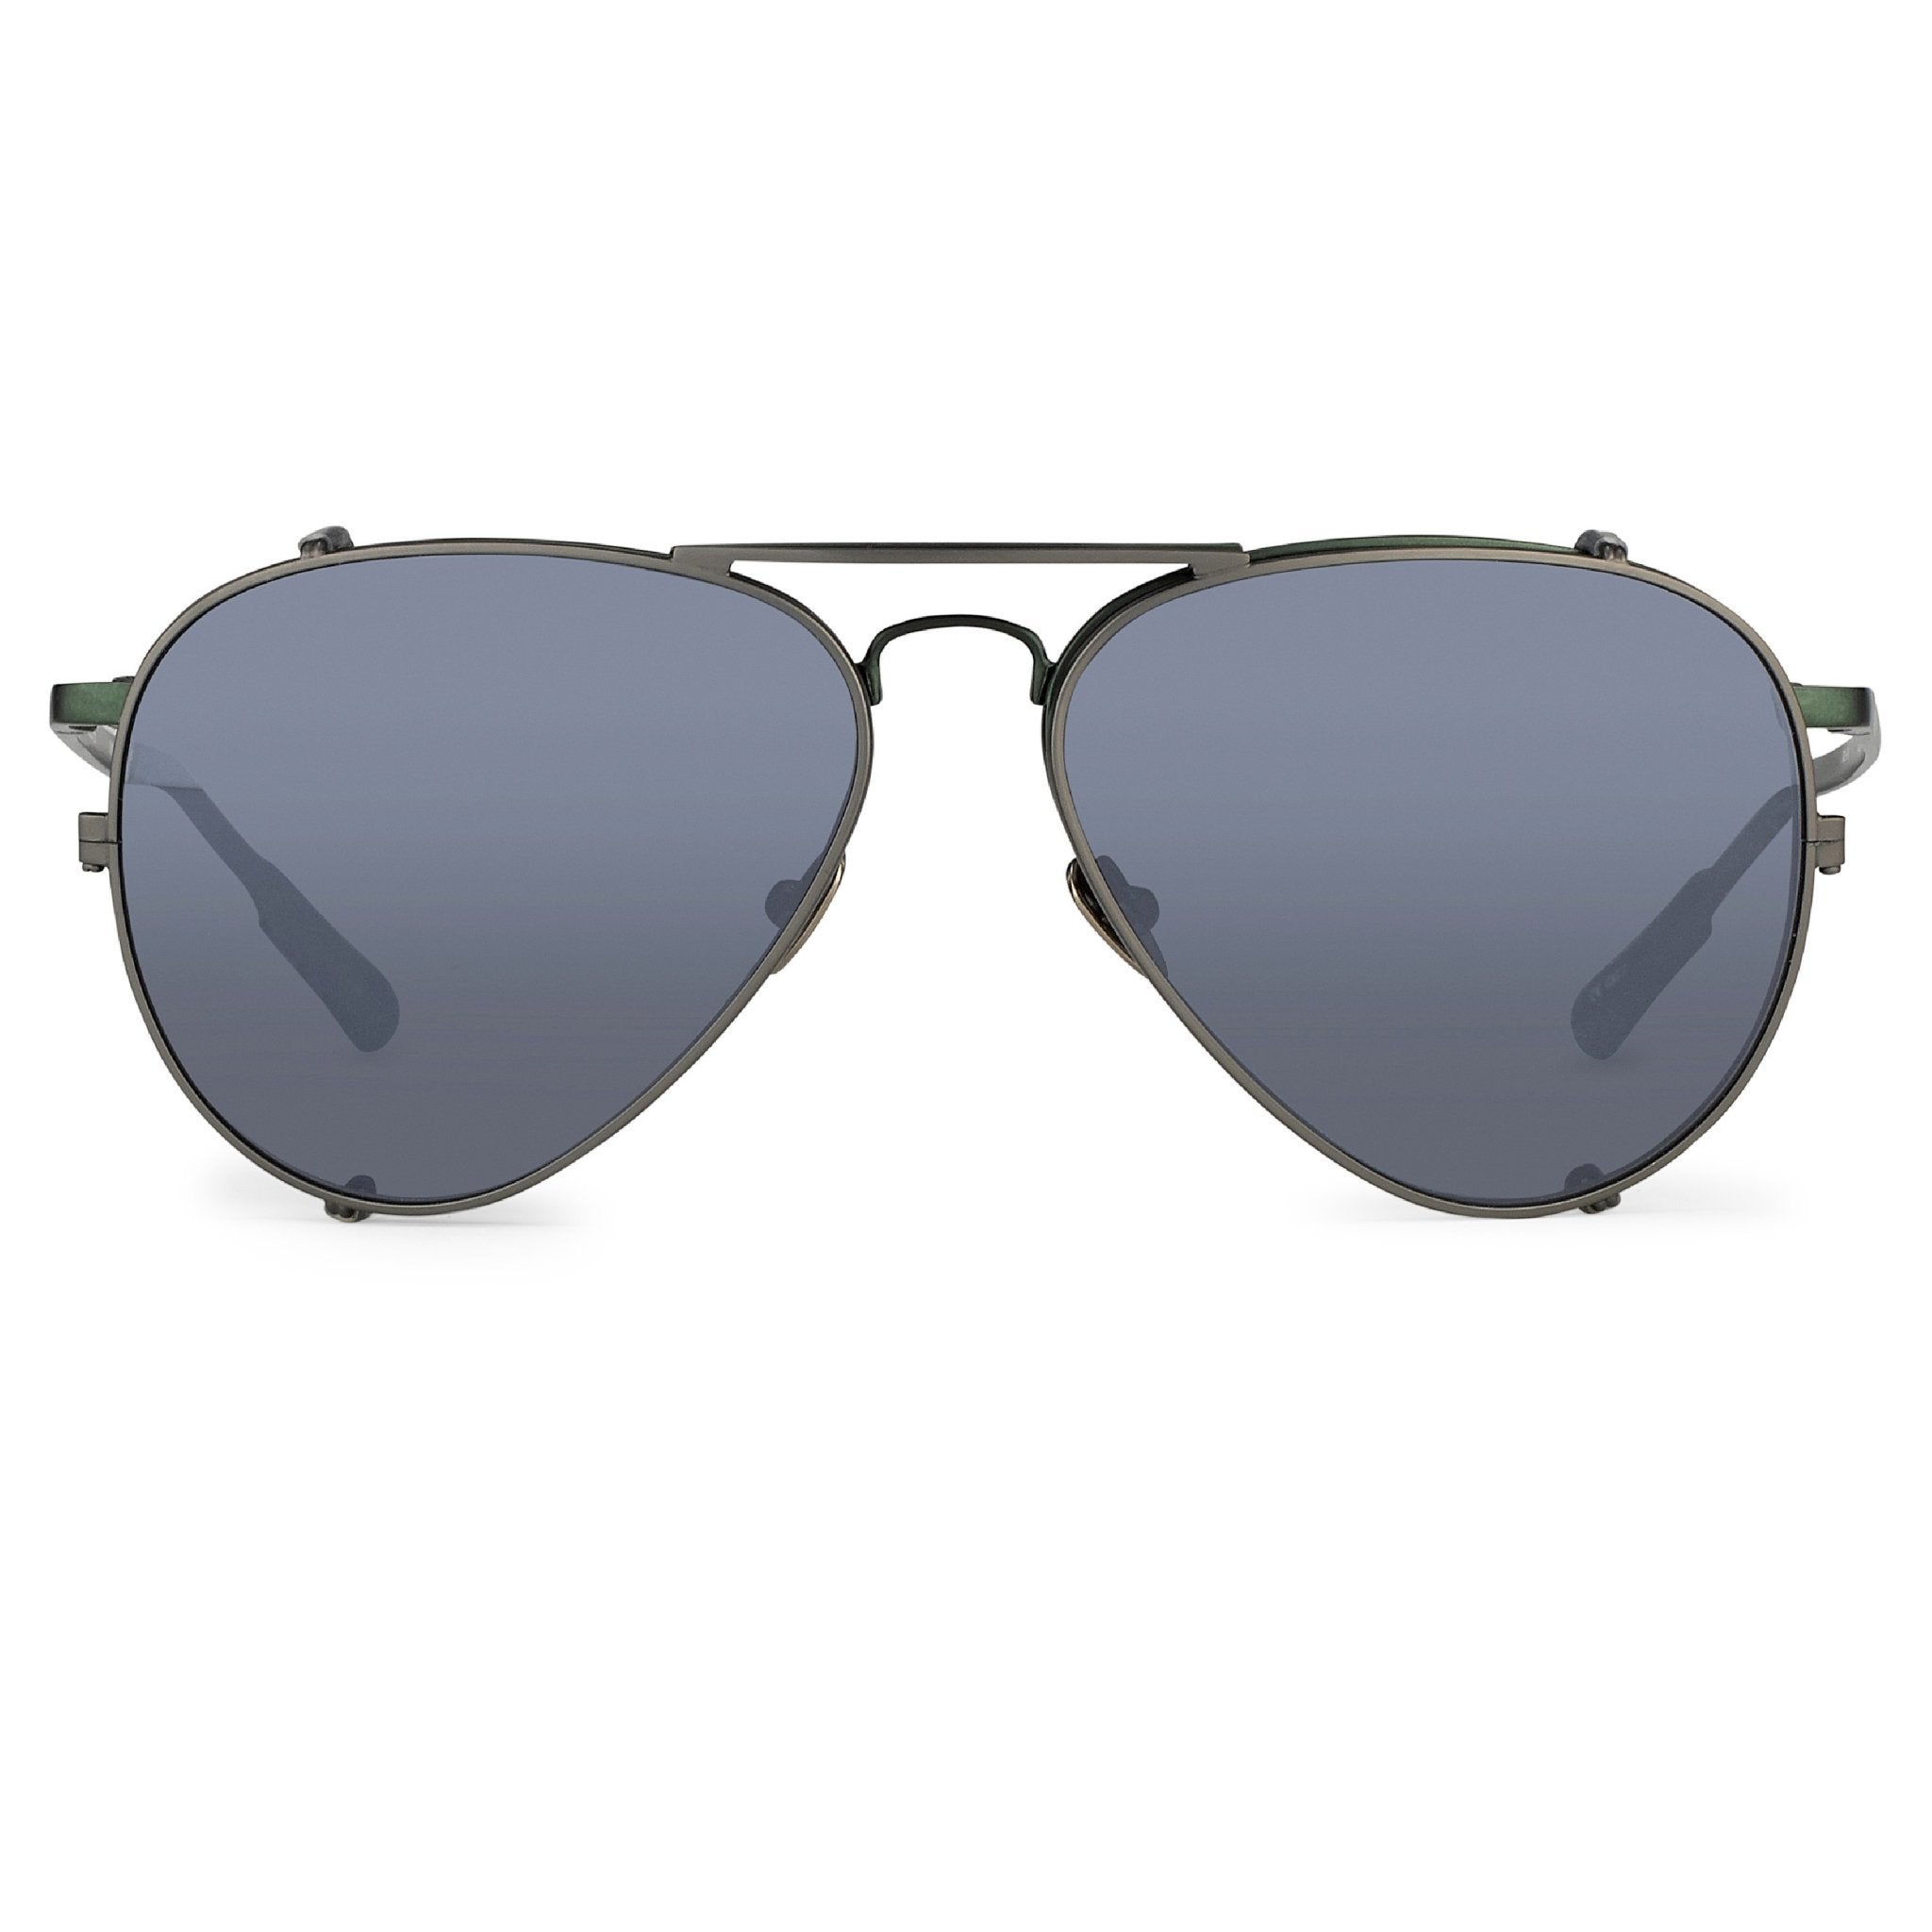 Kris Van Assche Sunglasses Unisex Titanium Green Grey Clip-On and Grey Flash Mirror Lenses Category 3 - KVA81C6SUN - Watches & Crystals